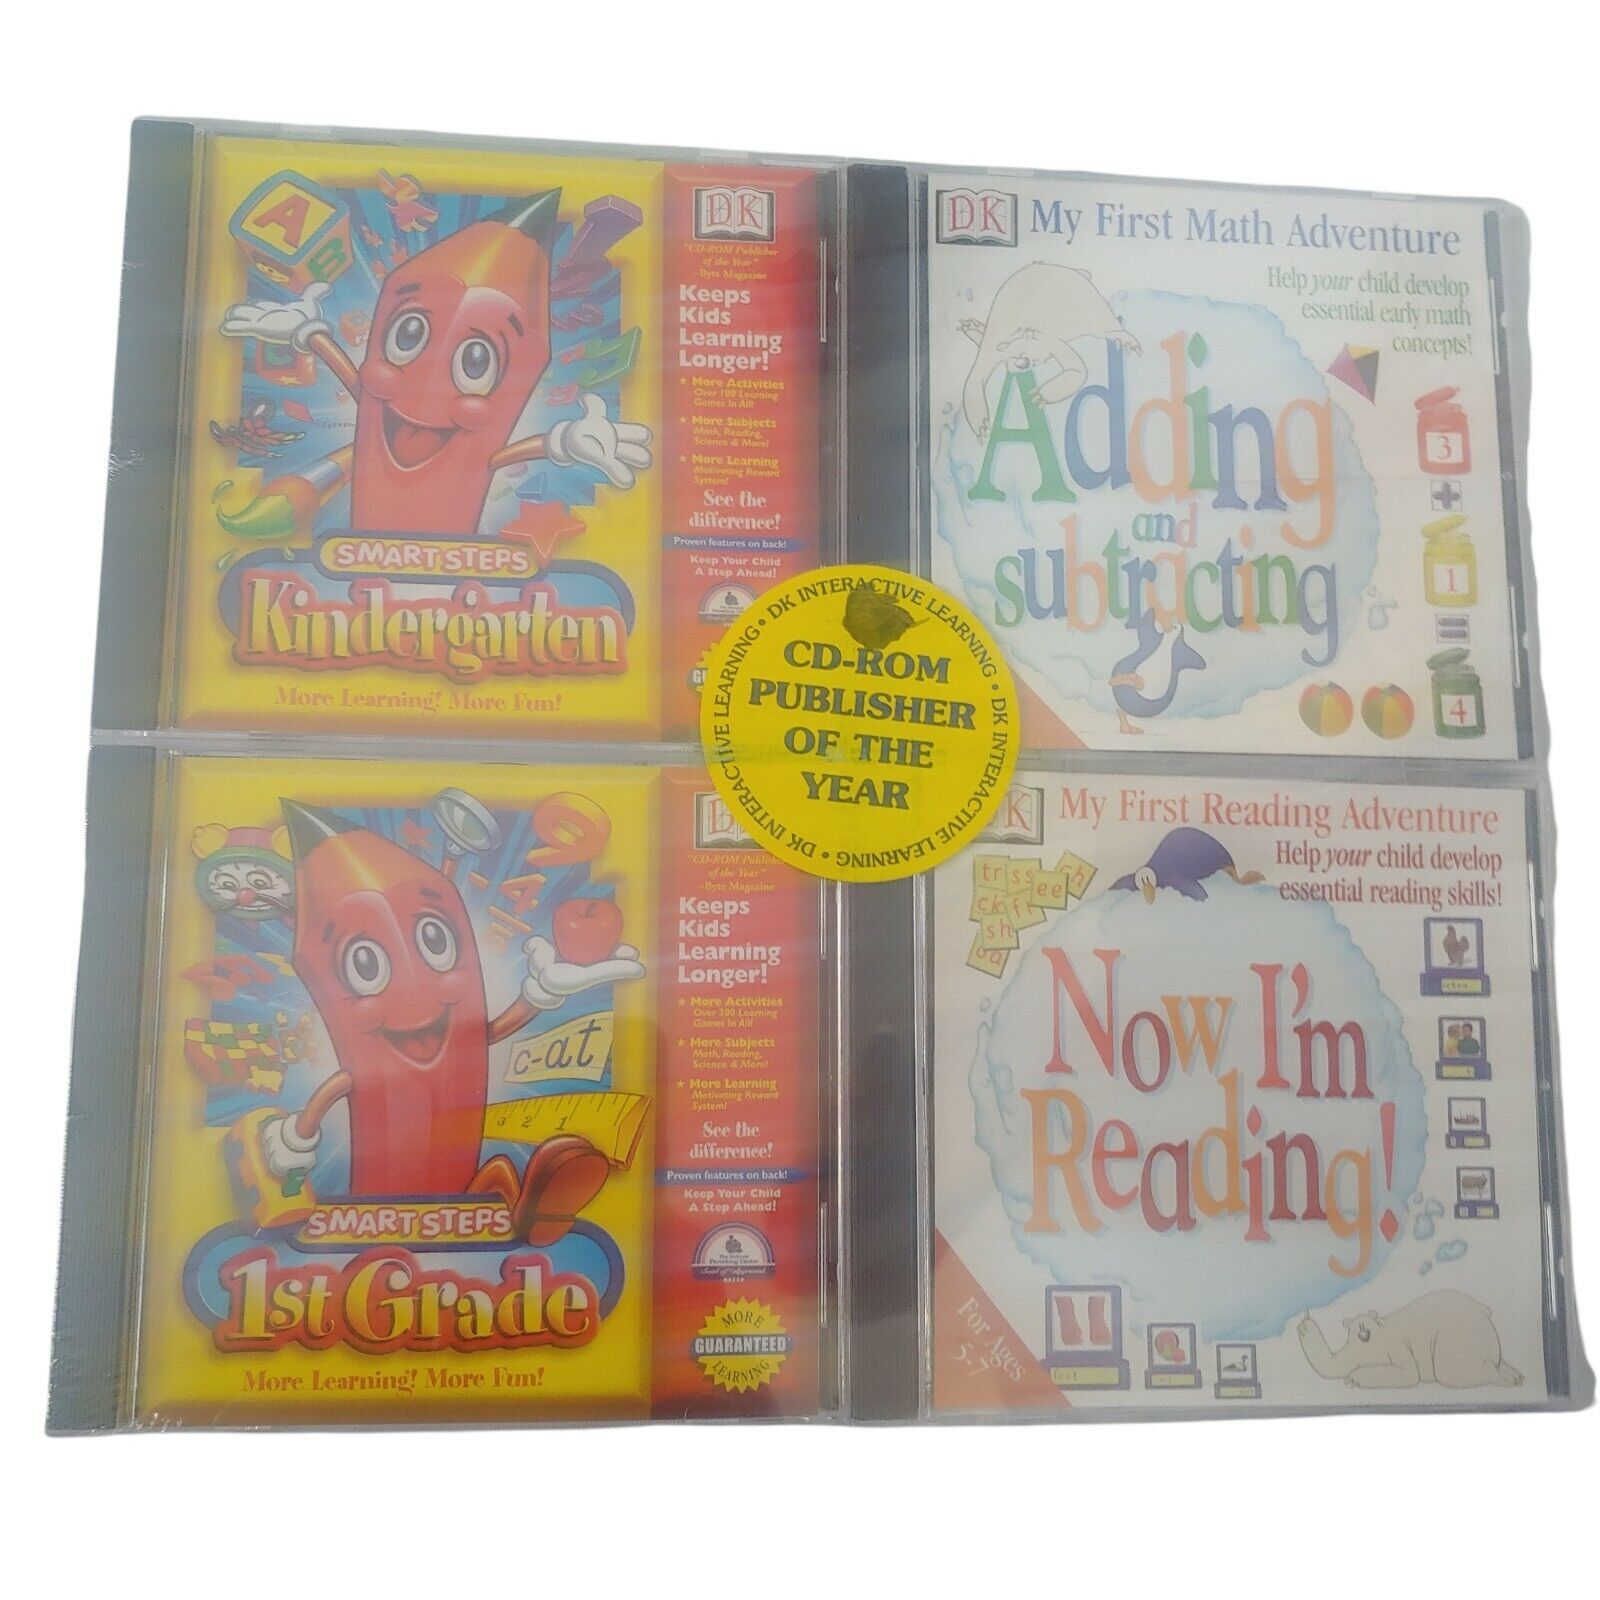 DK Interactive Learning 4 Pack CD-ROM Kindergarten 1st Grade Math Reading New